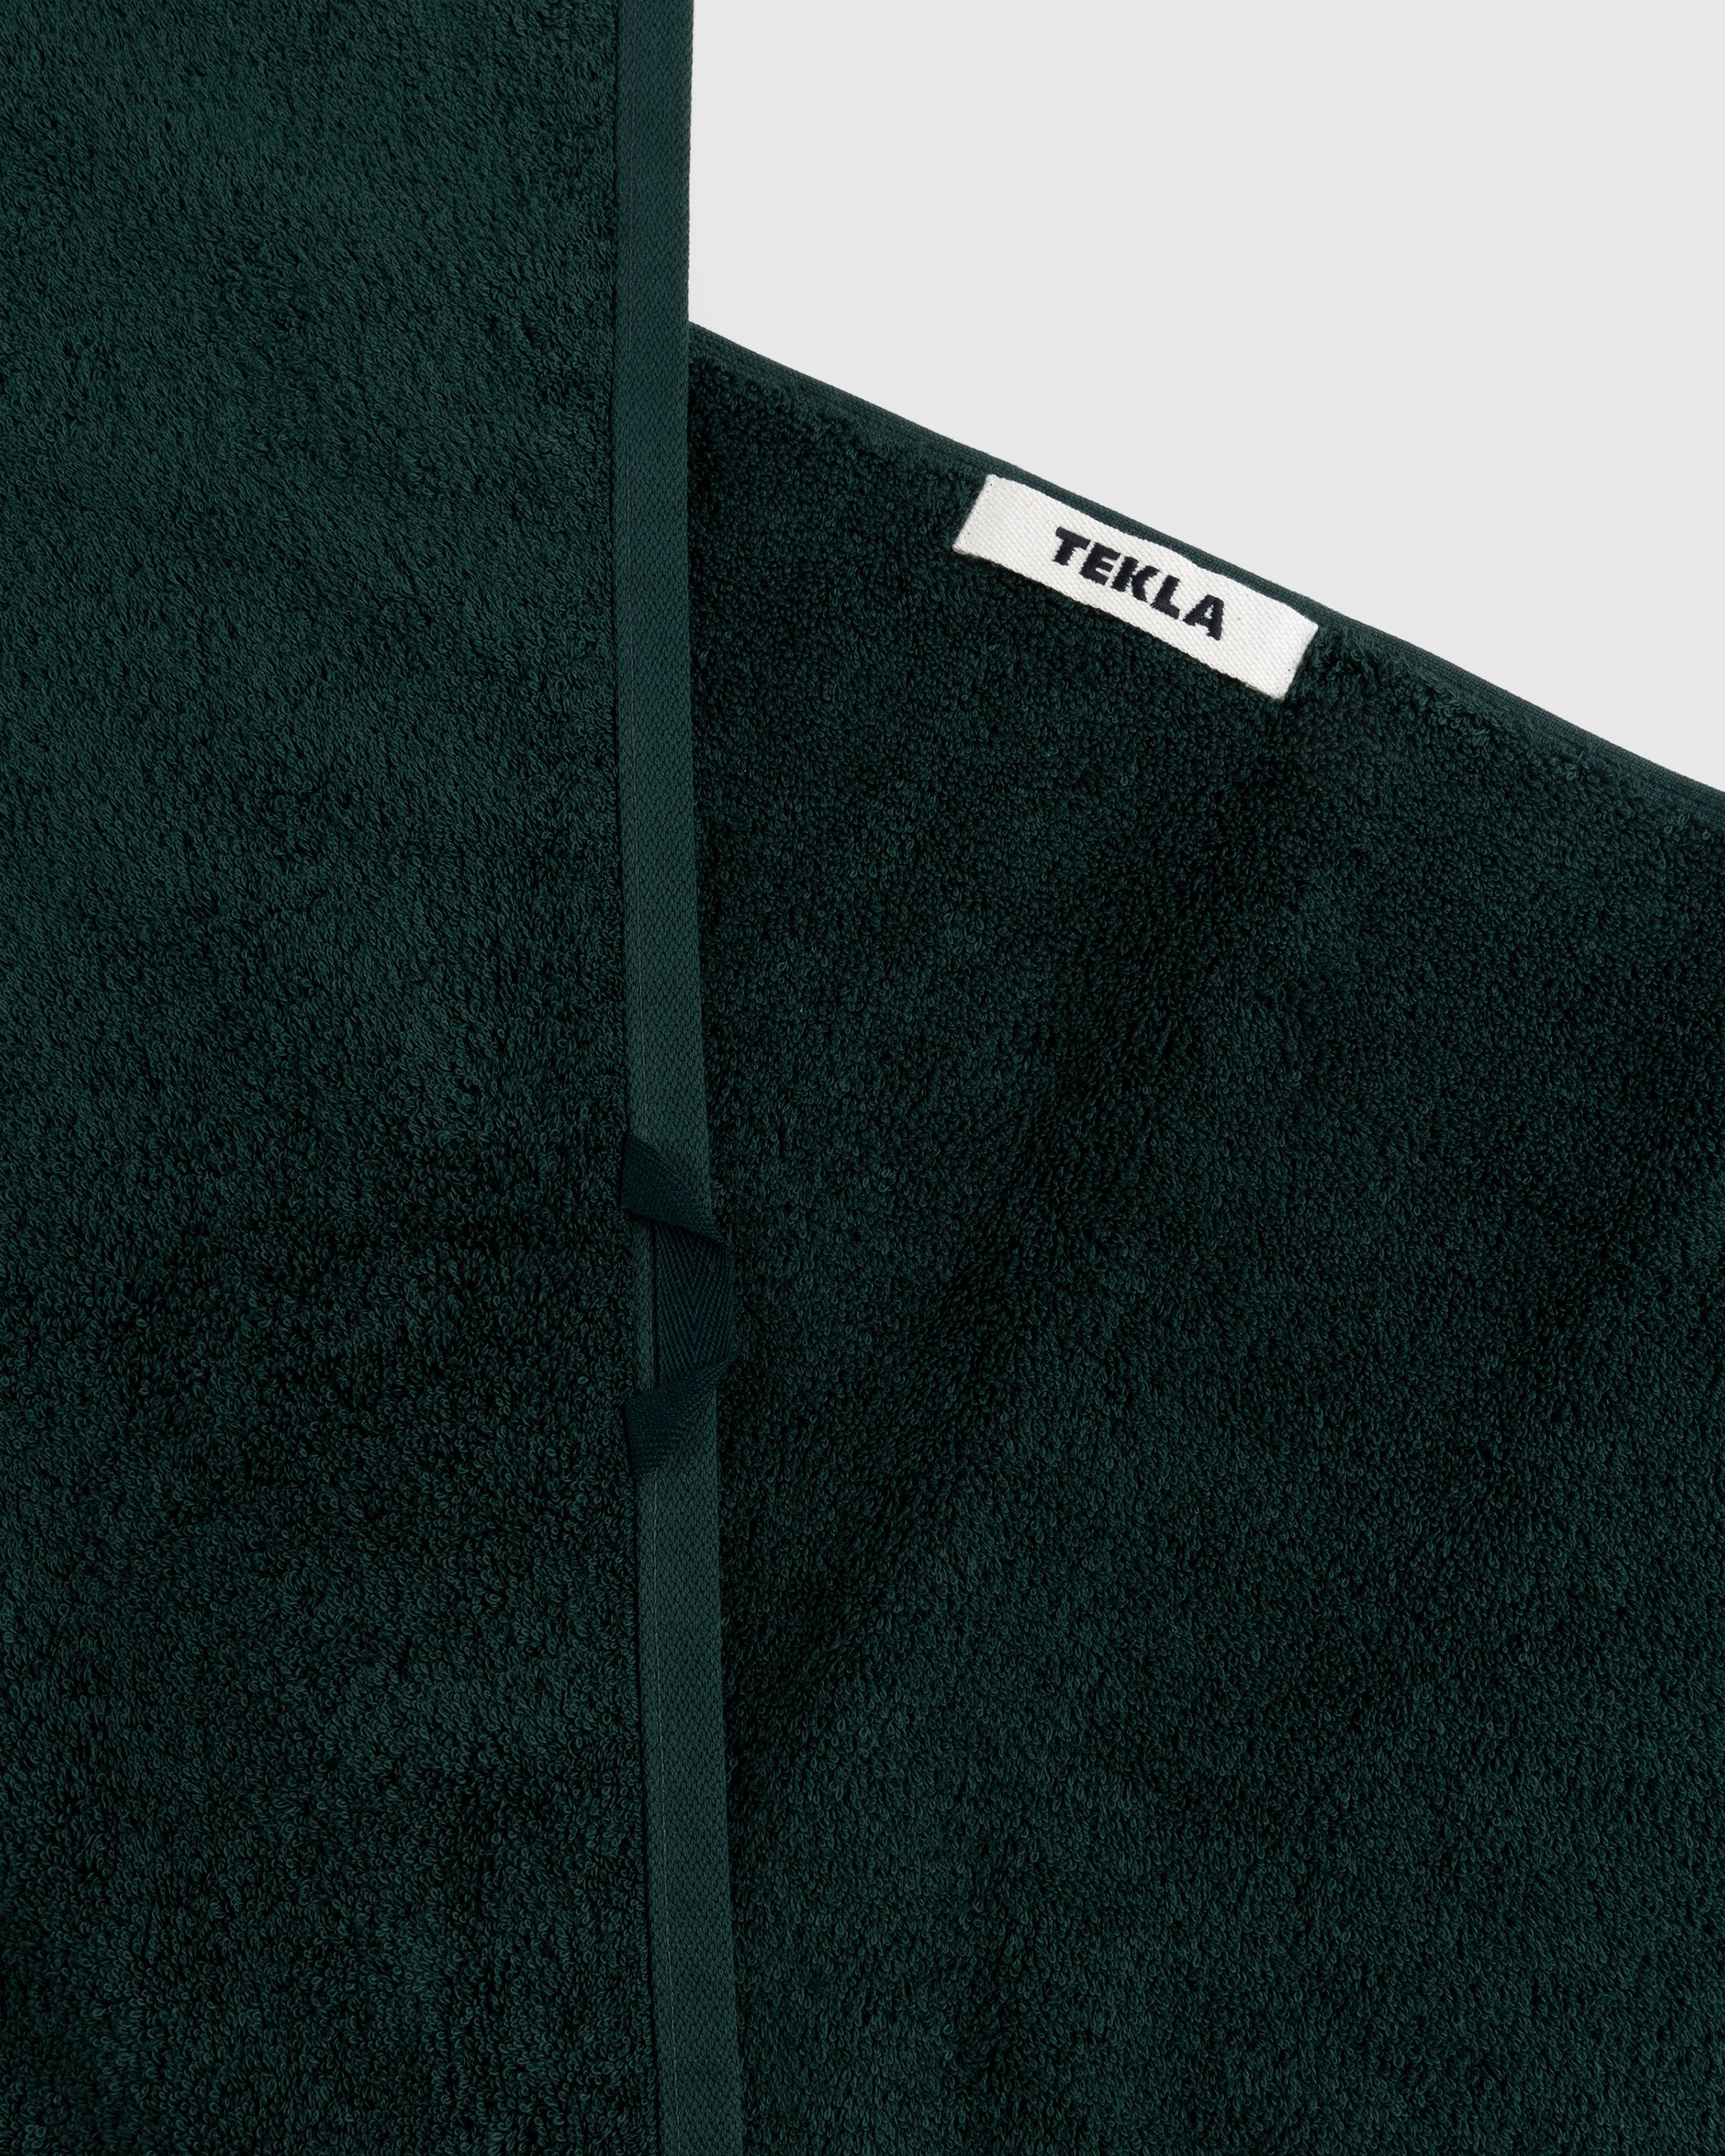 Tekla - Bath Towel Forest Green - Lifestyle - Green - Image 3